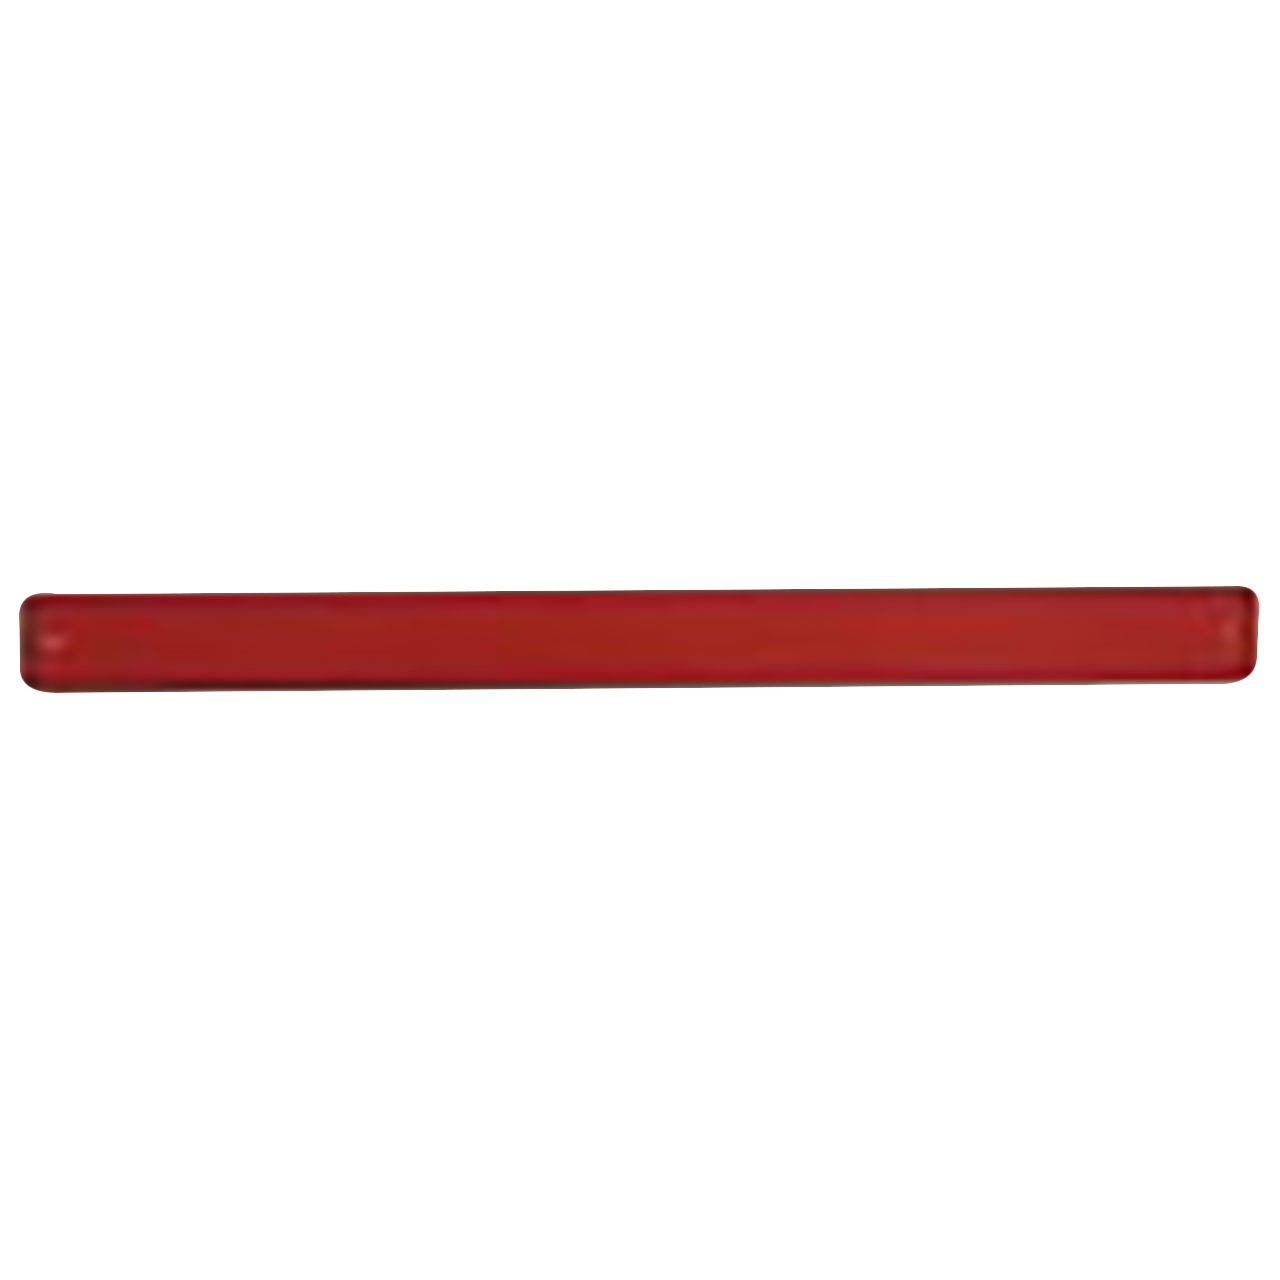 Bohrleiste CB 490 für NAGEL Citoborma 111, rot